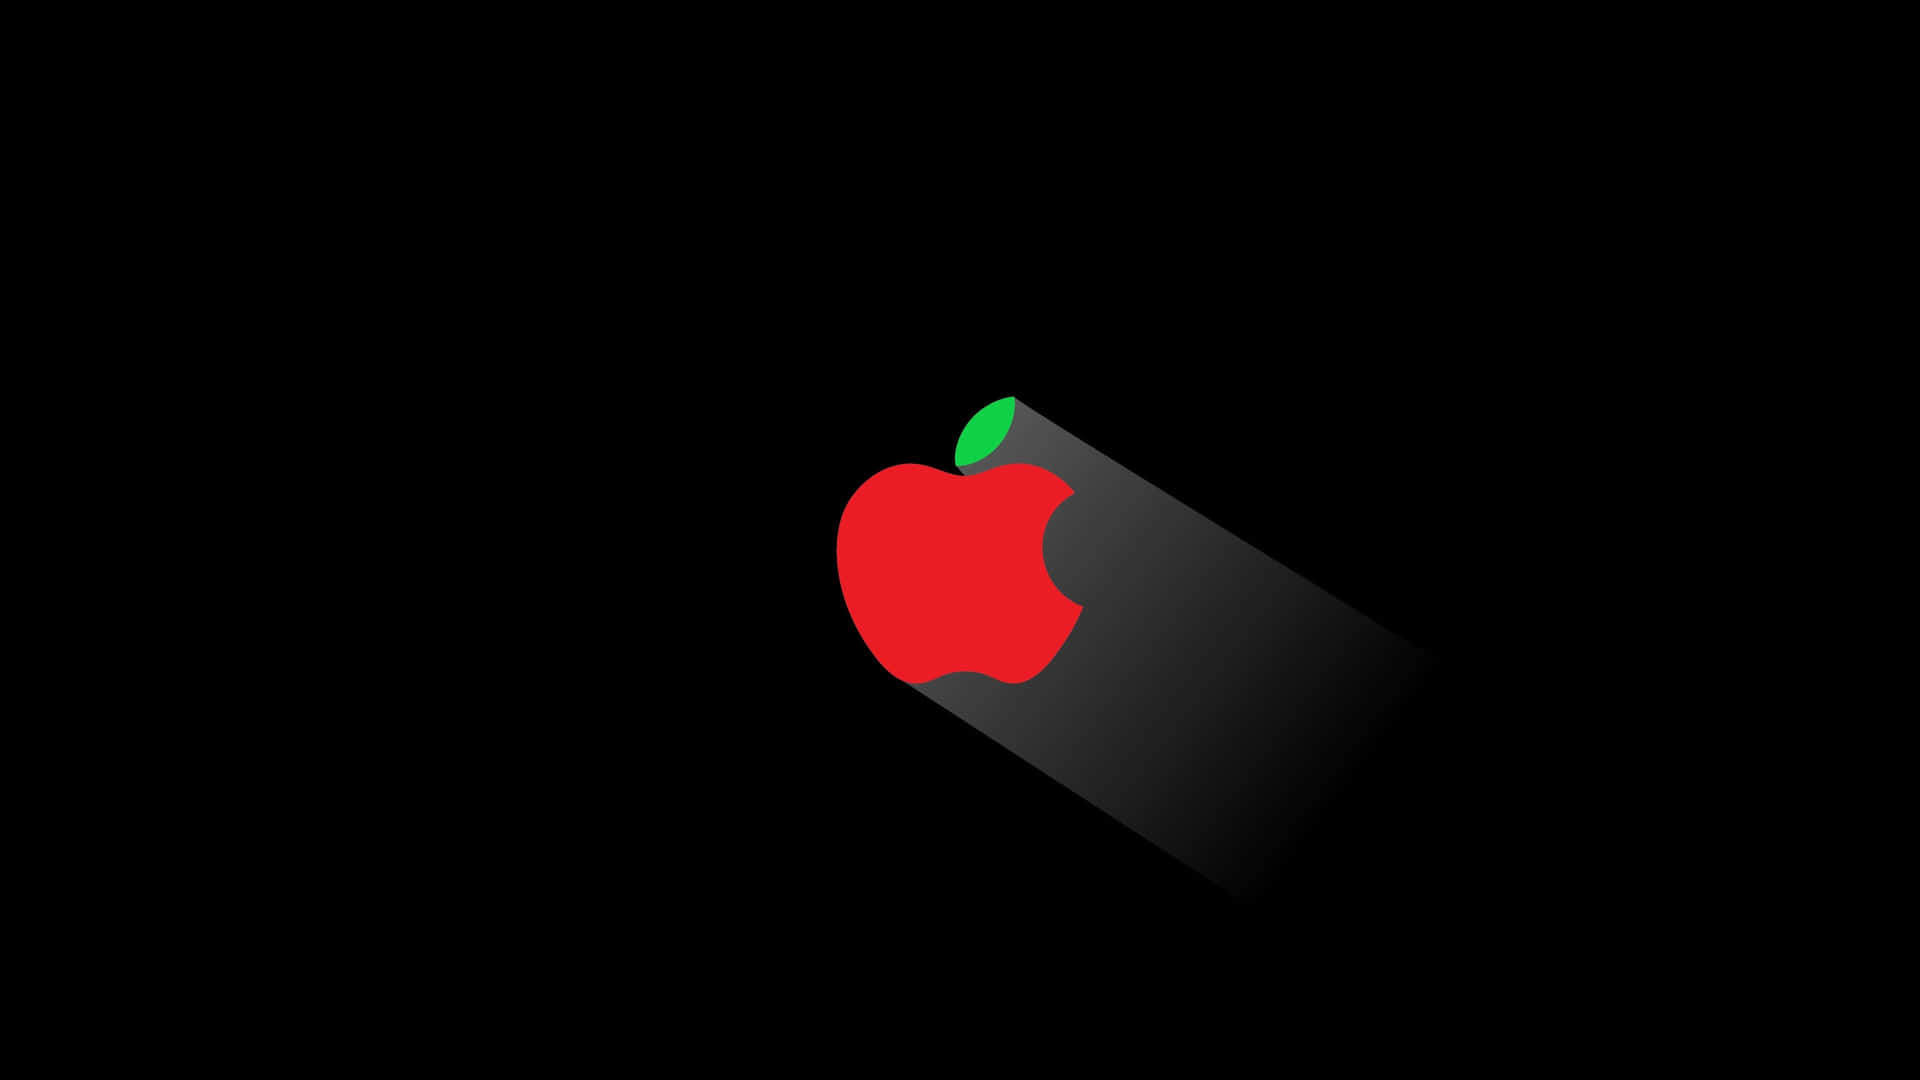 A 4K resolution Apple logo against a black background. Wallpaper